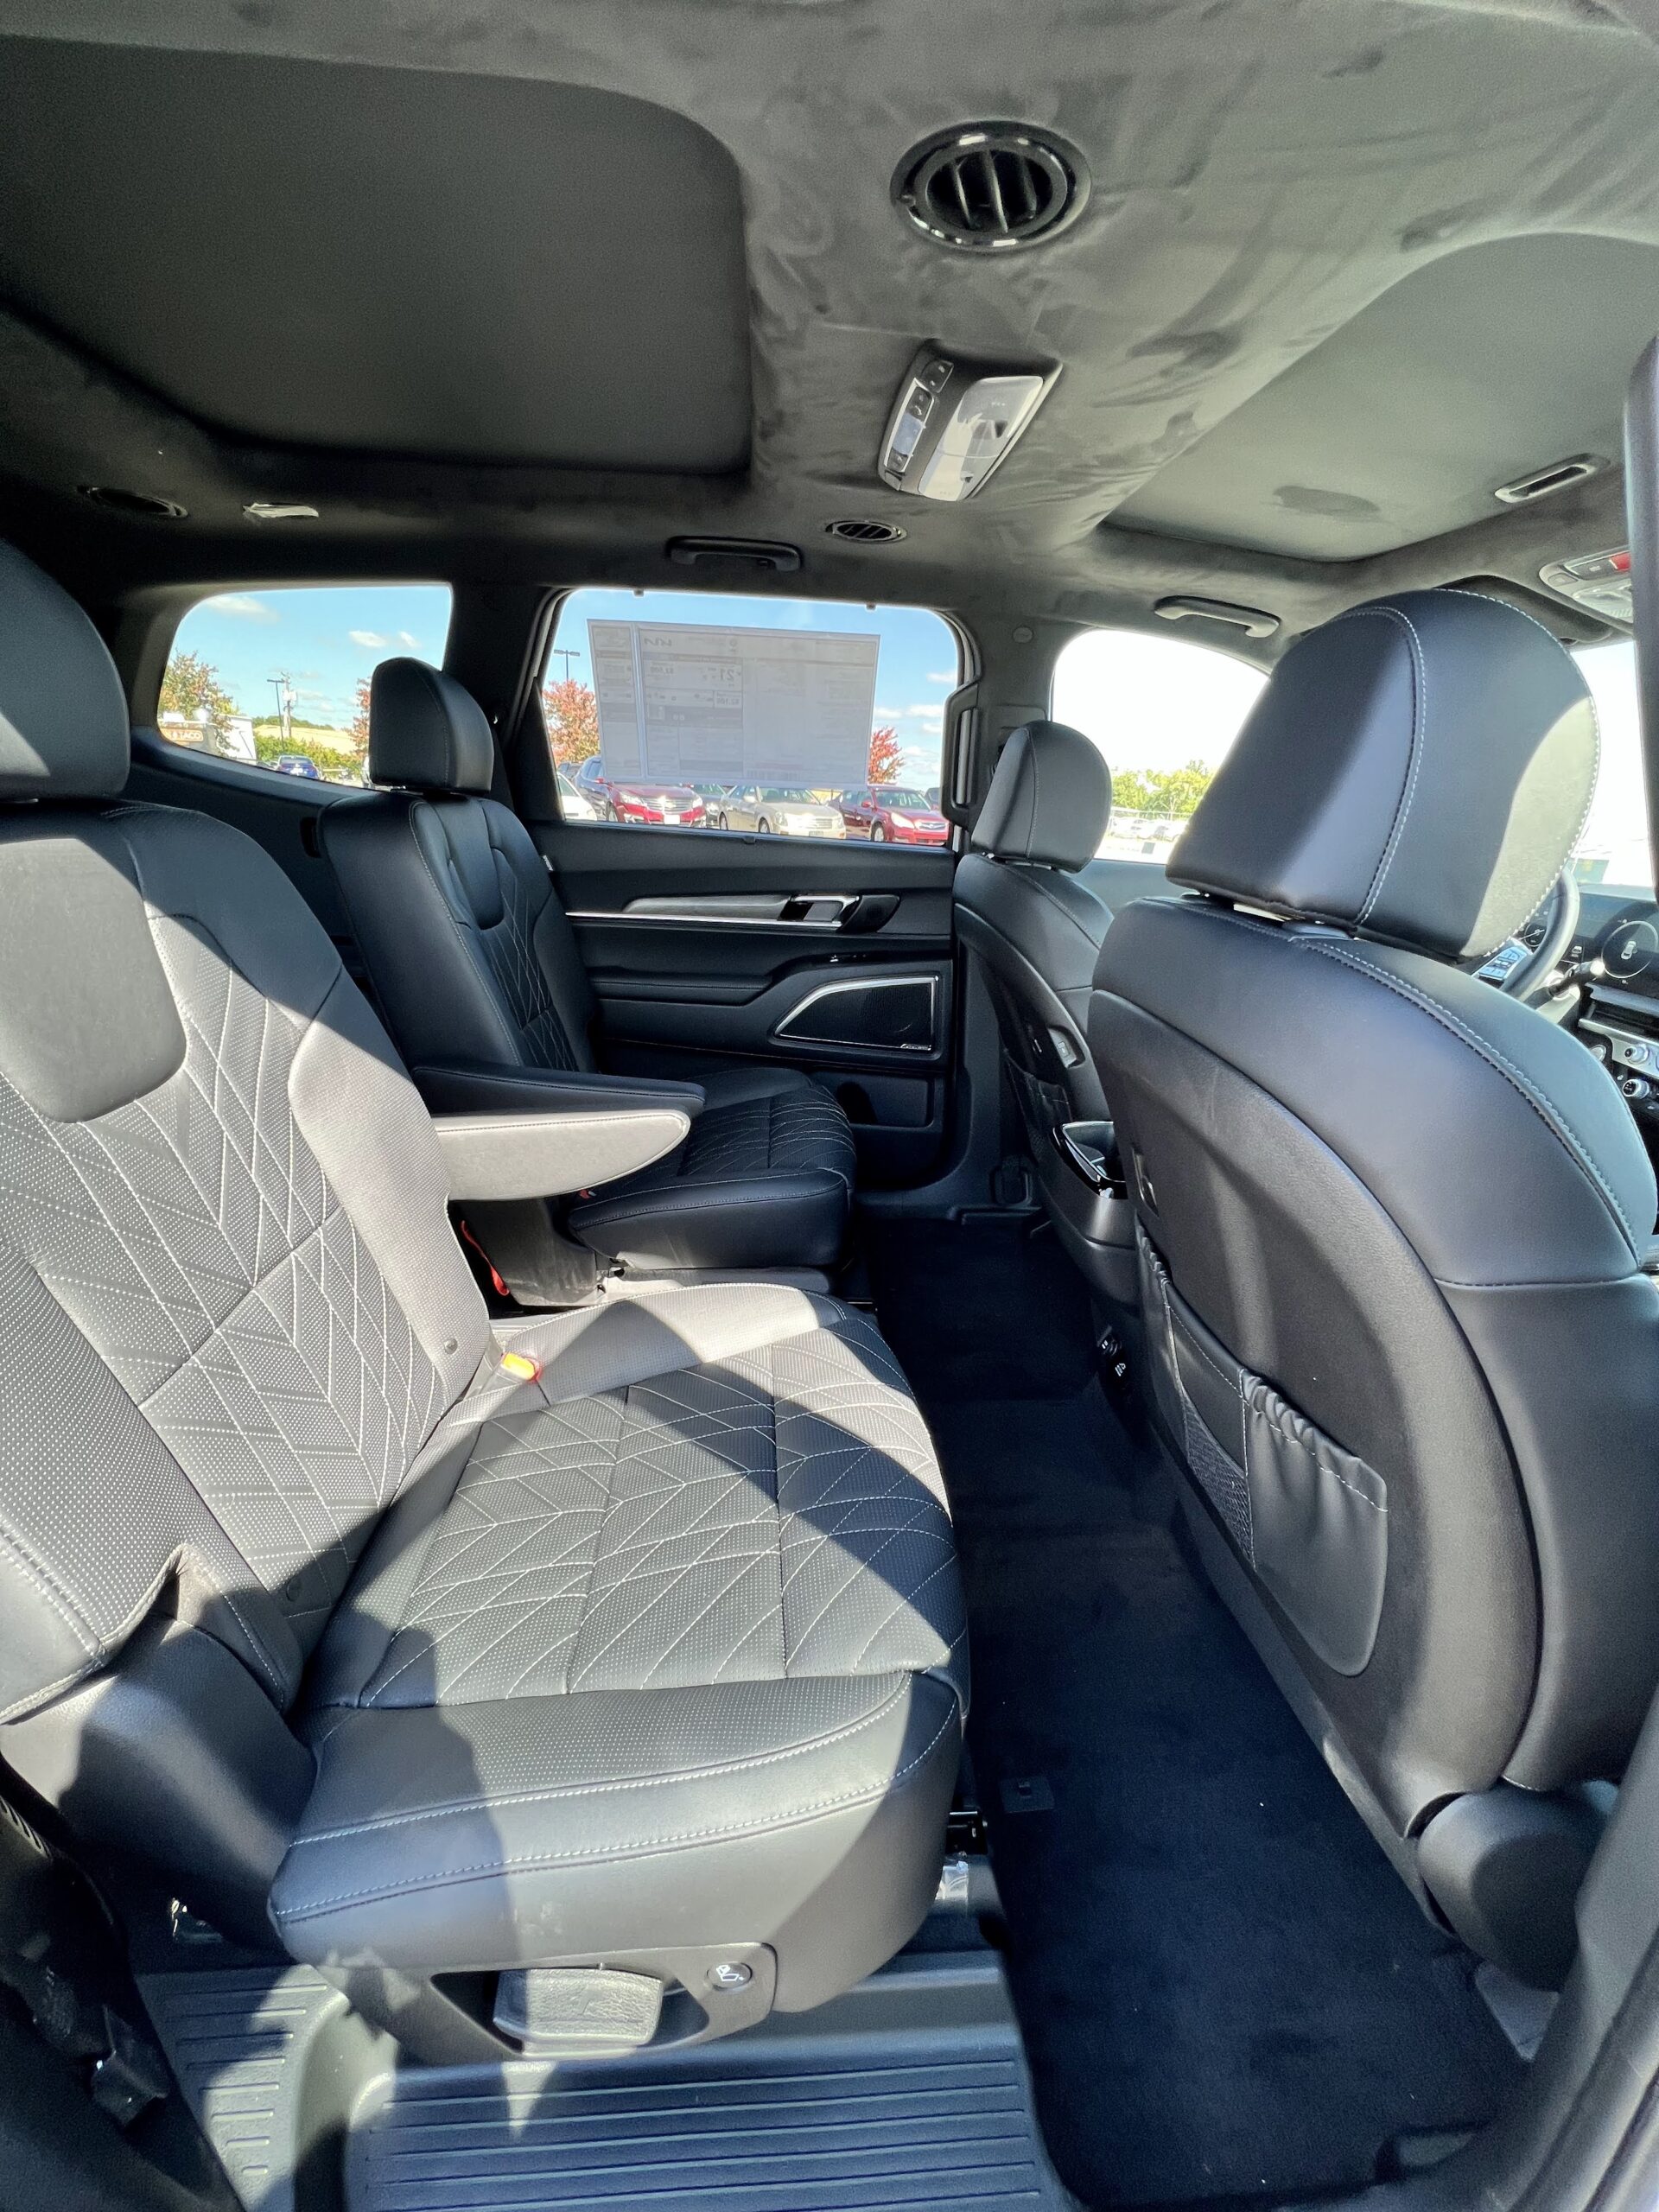 Kia Telluride Interior Rear Seat